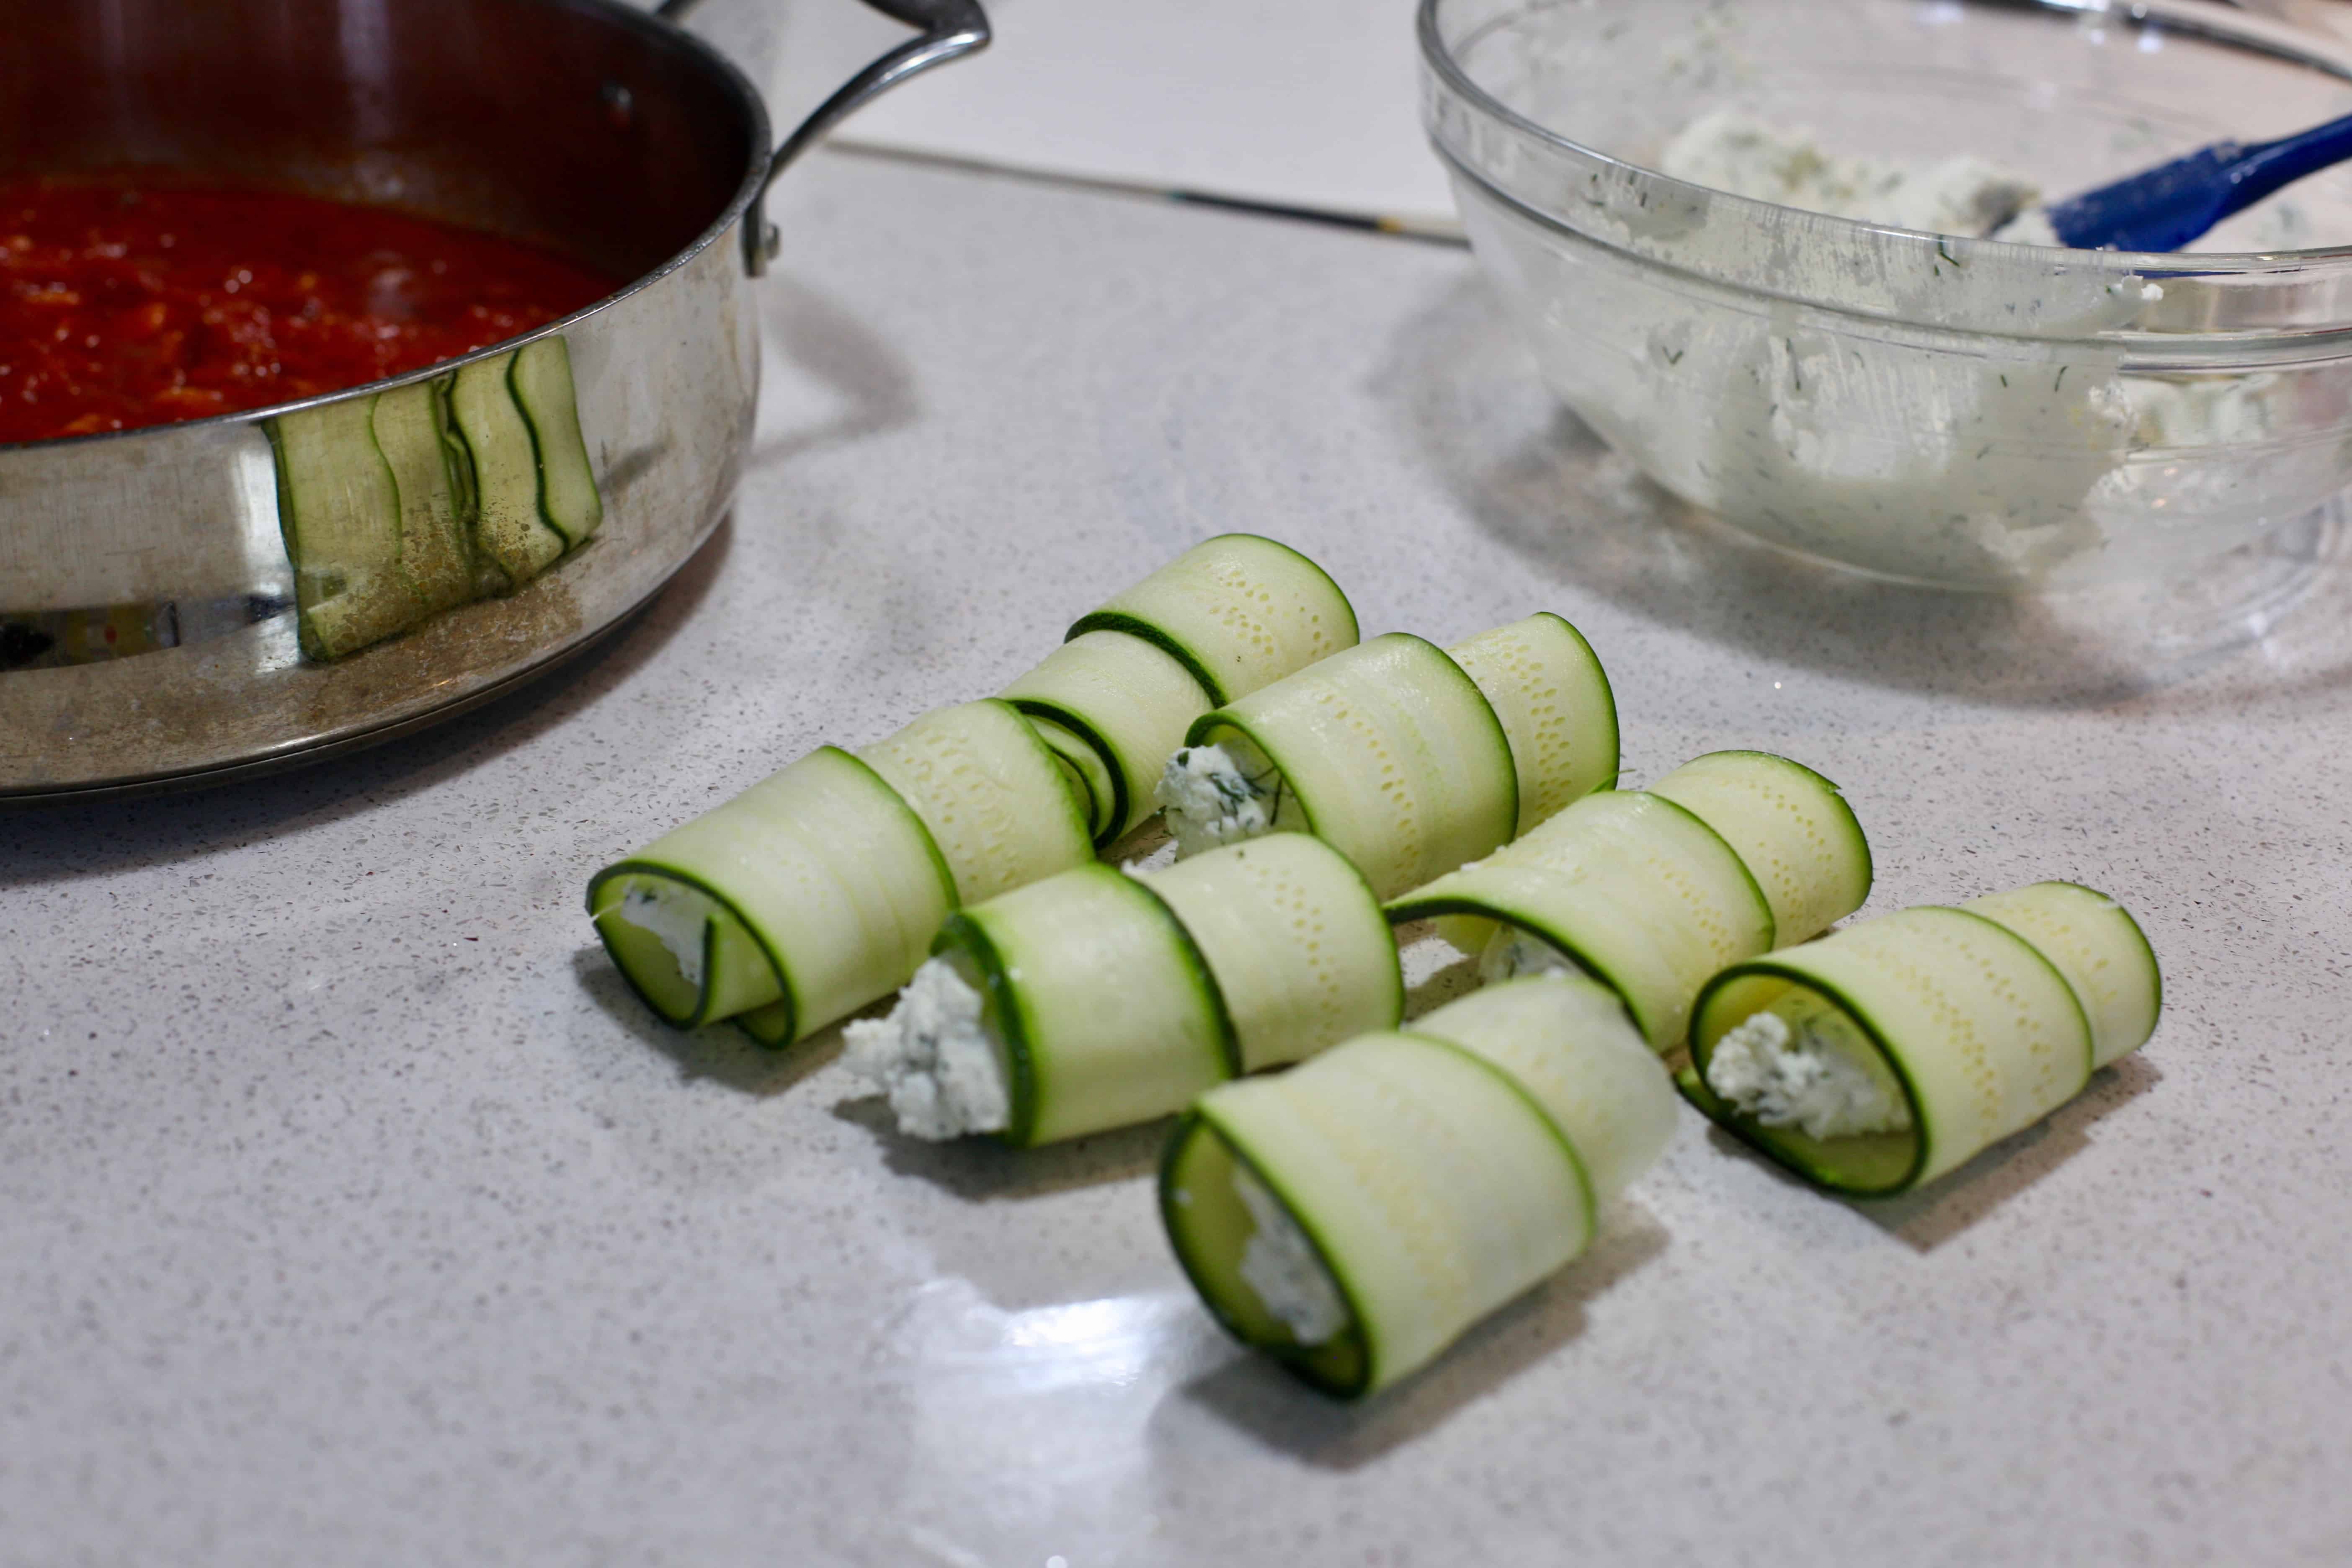 zuchinni rolls prepped